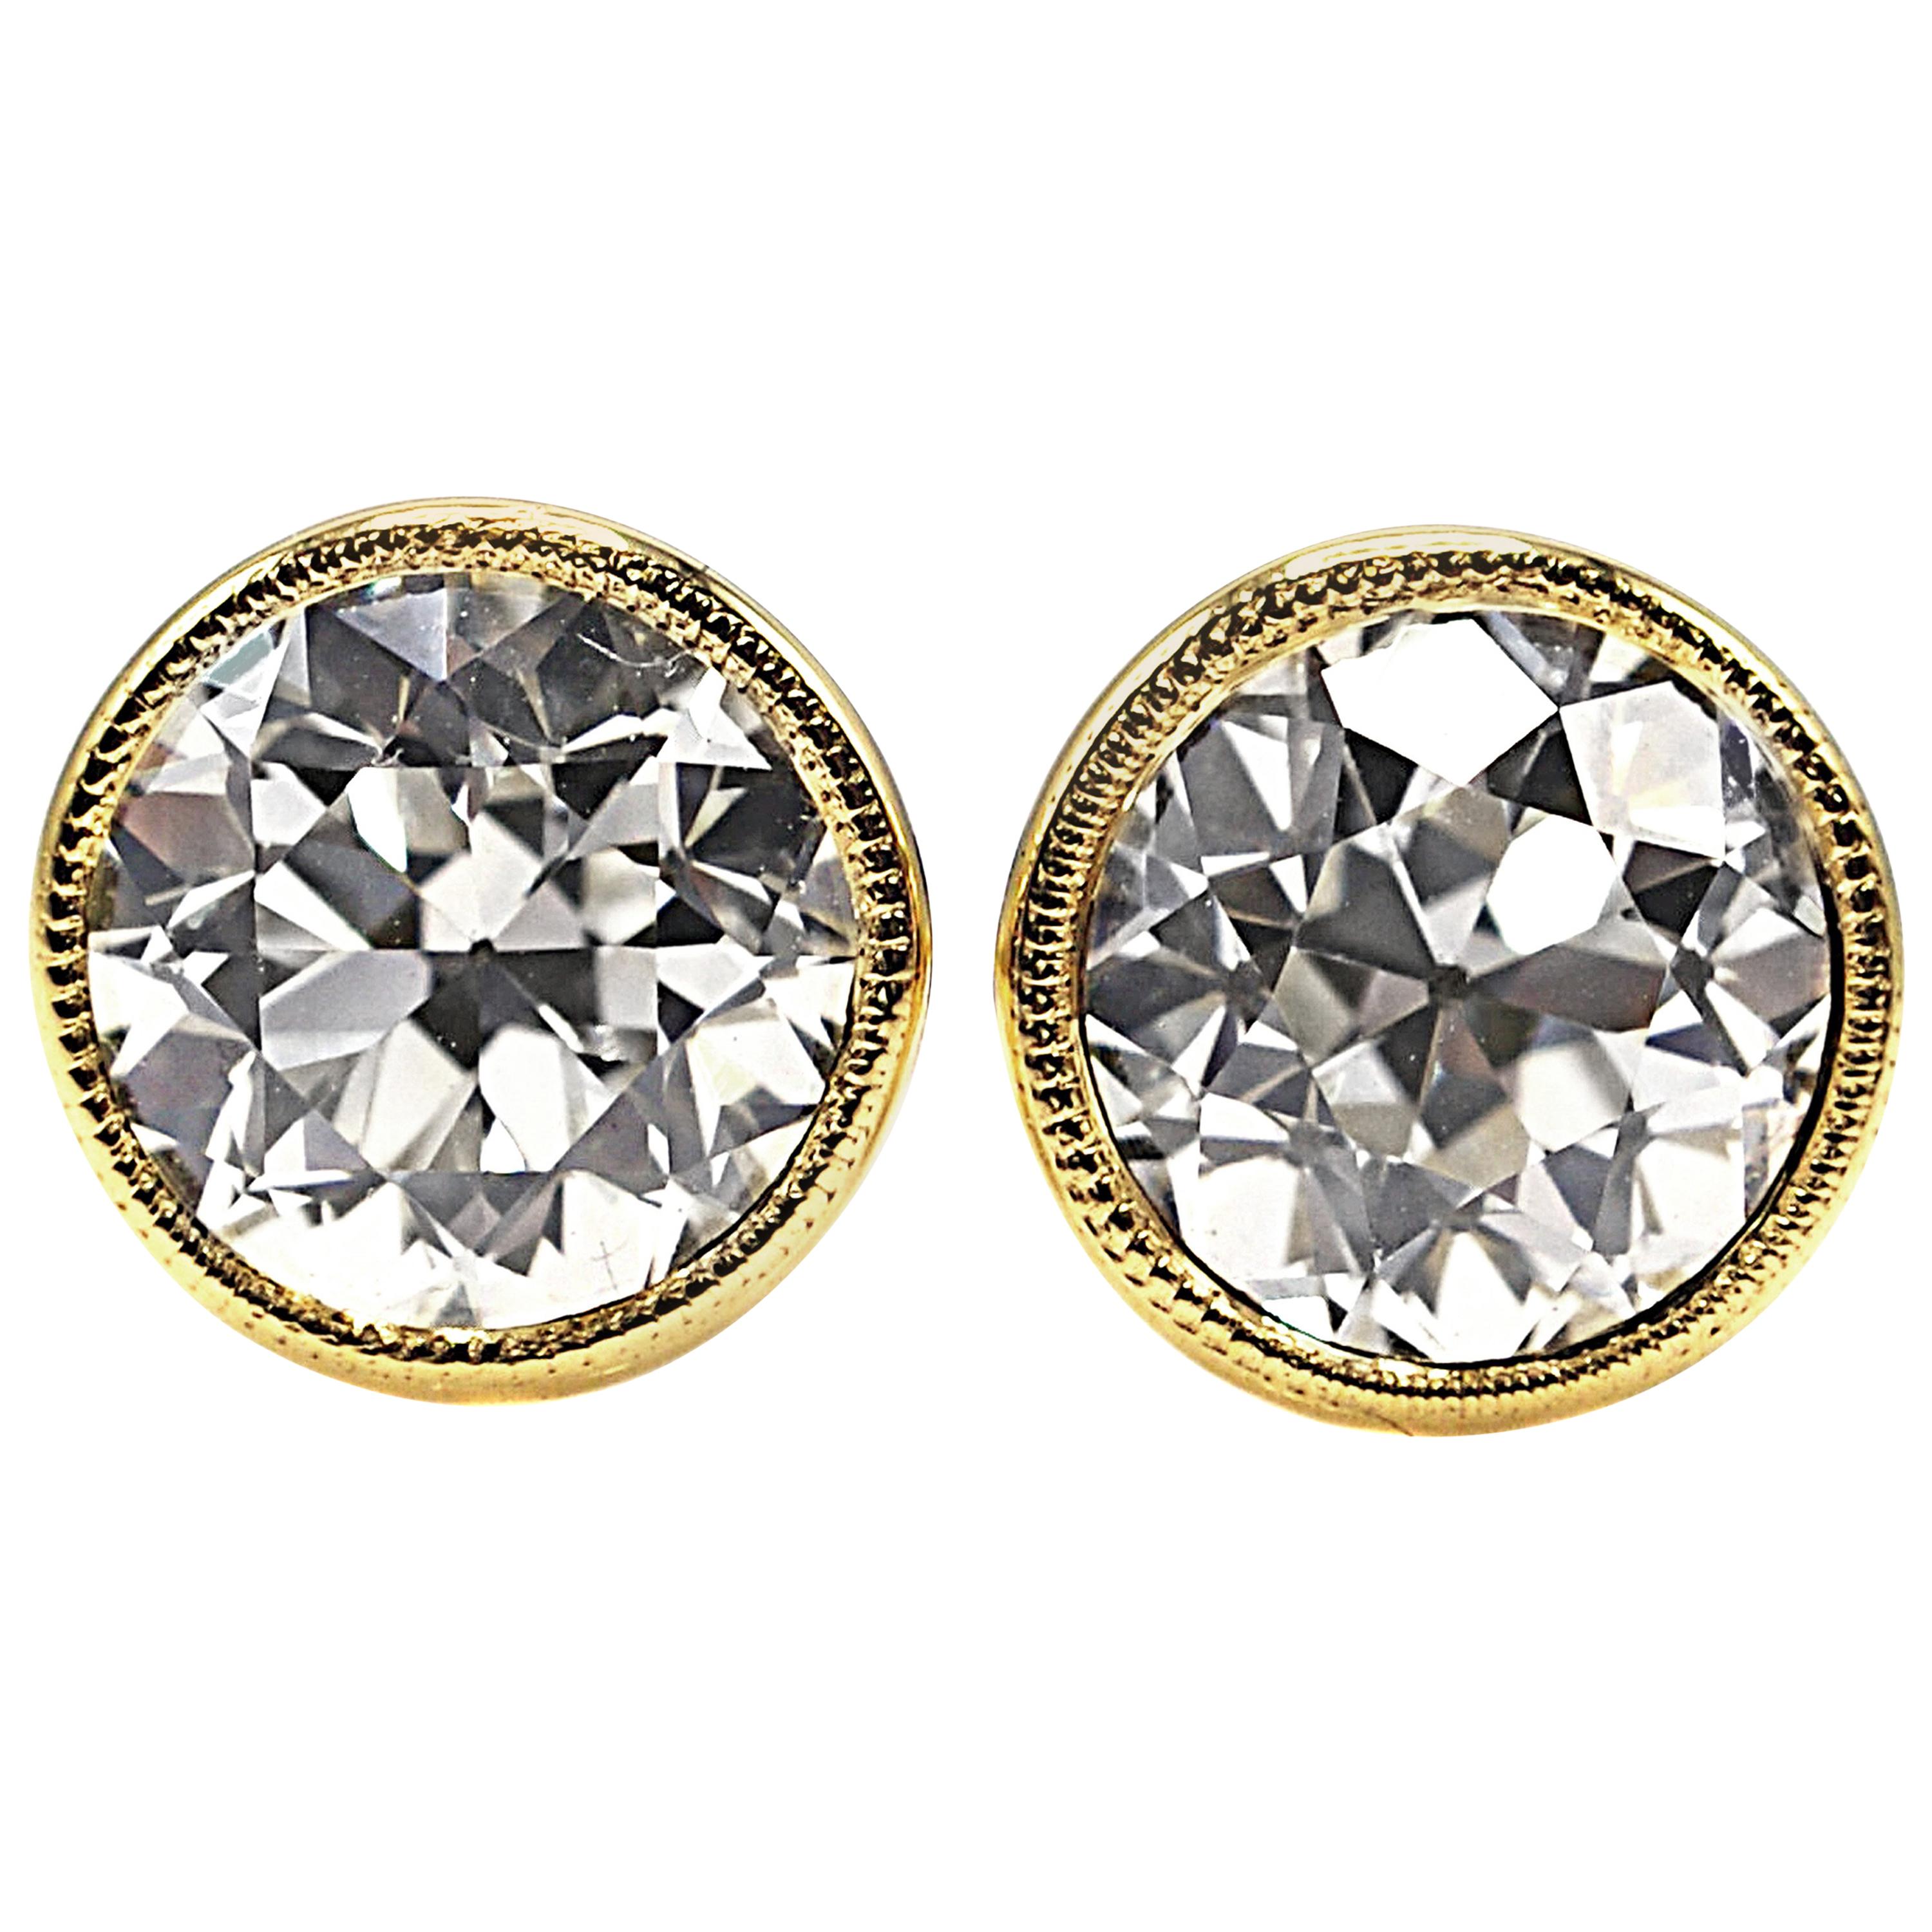 Old European Cut 3.12 Carat GIA Certified Diamond Gold Stud Earrings